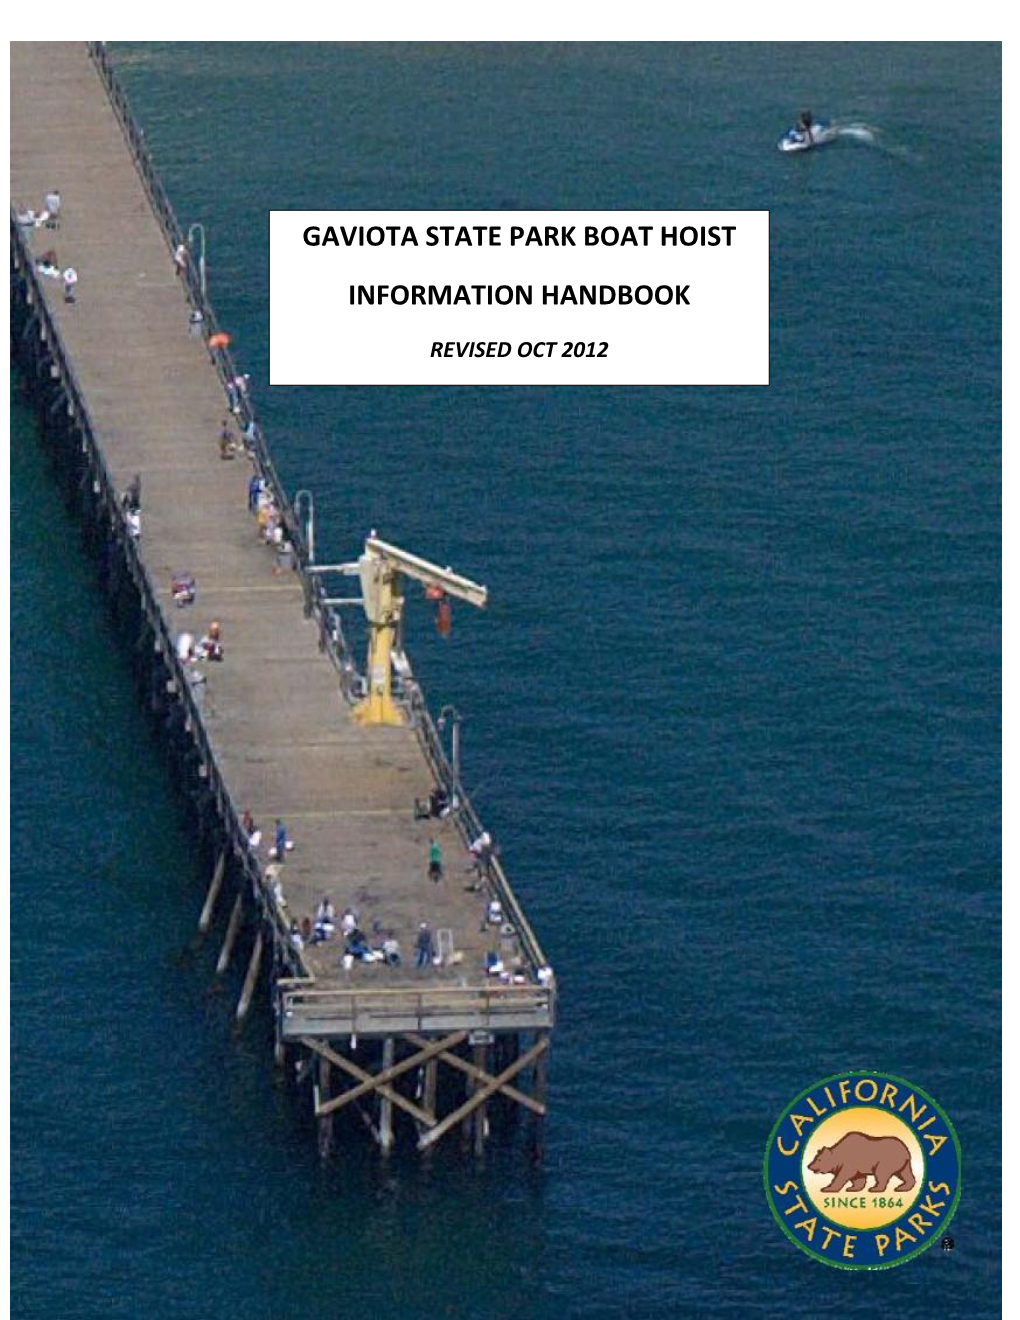 Gaviota State Park Boat Hoist Information Handbook